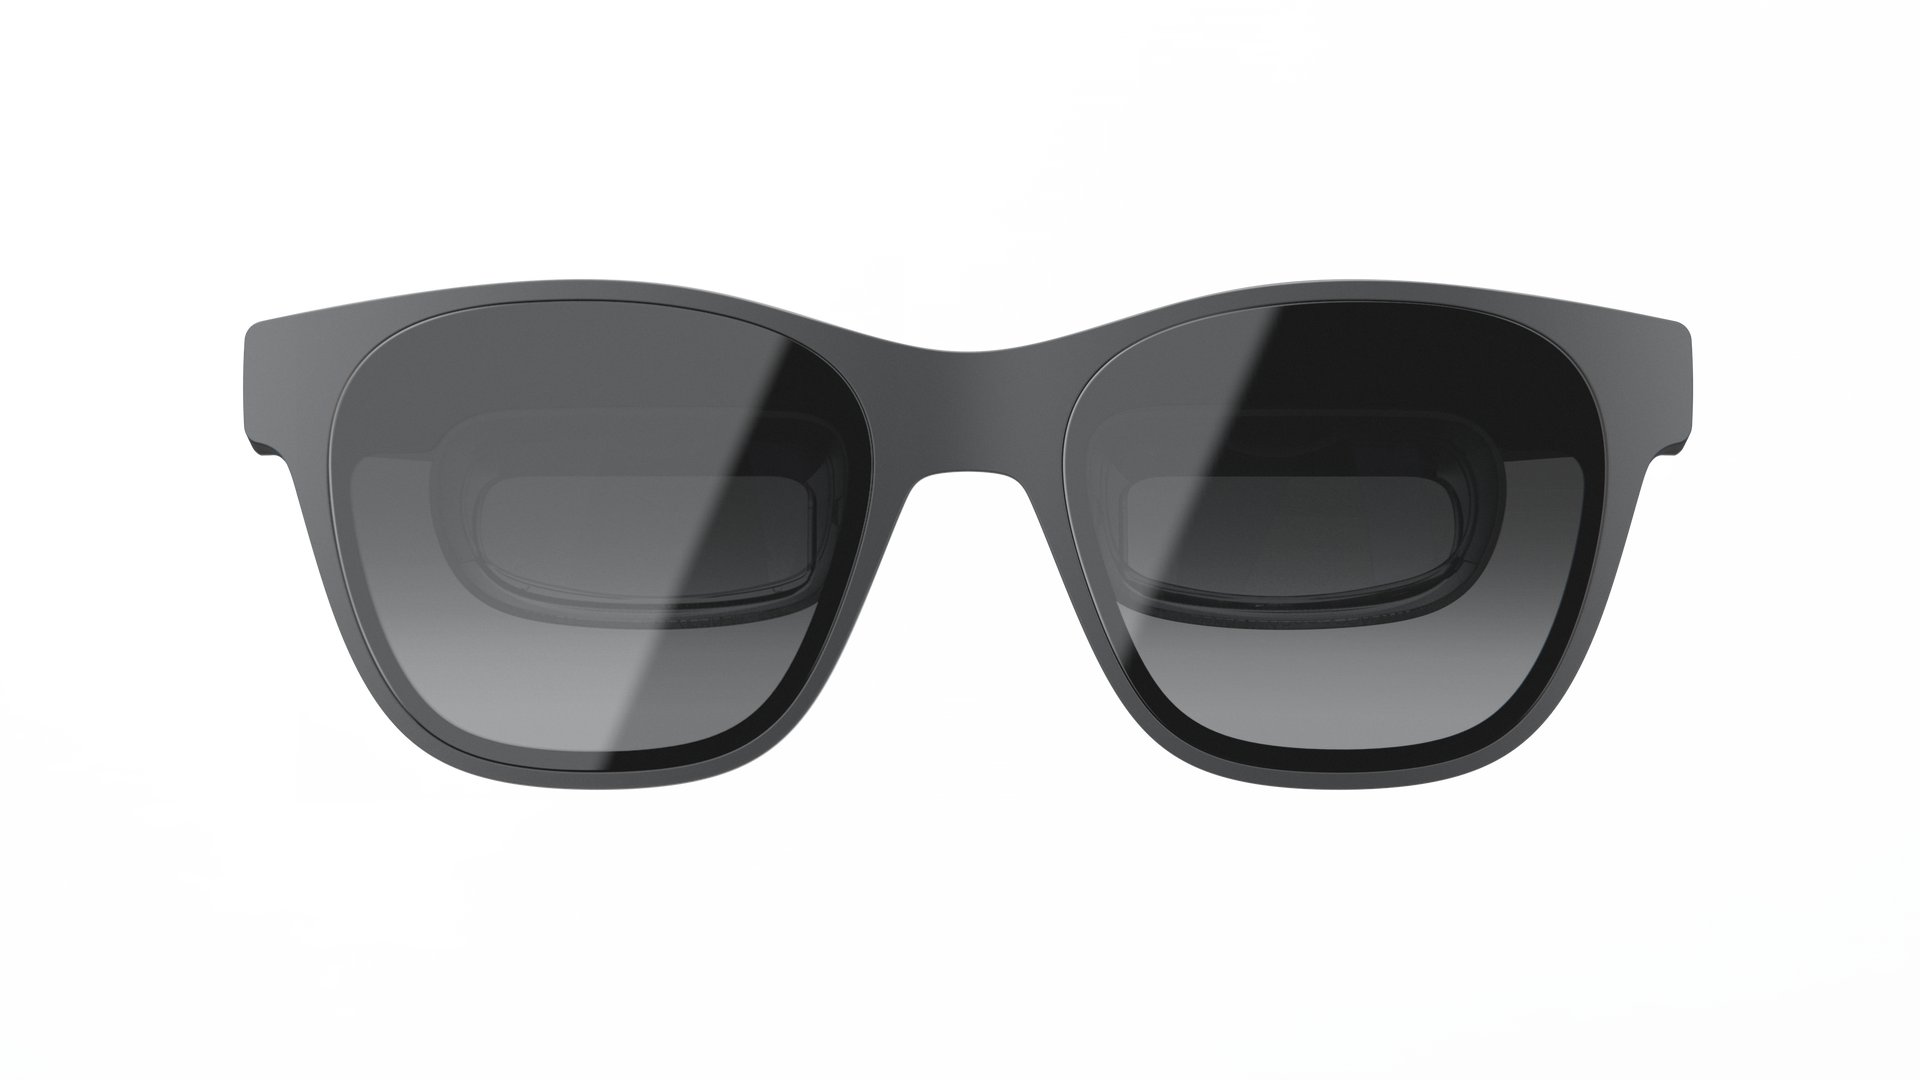 VR AR Accessorise XREAL Air 2 Nreal Air2 Gafas AR Inteligentes